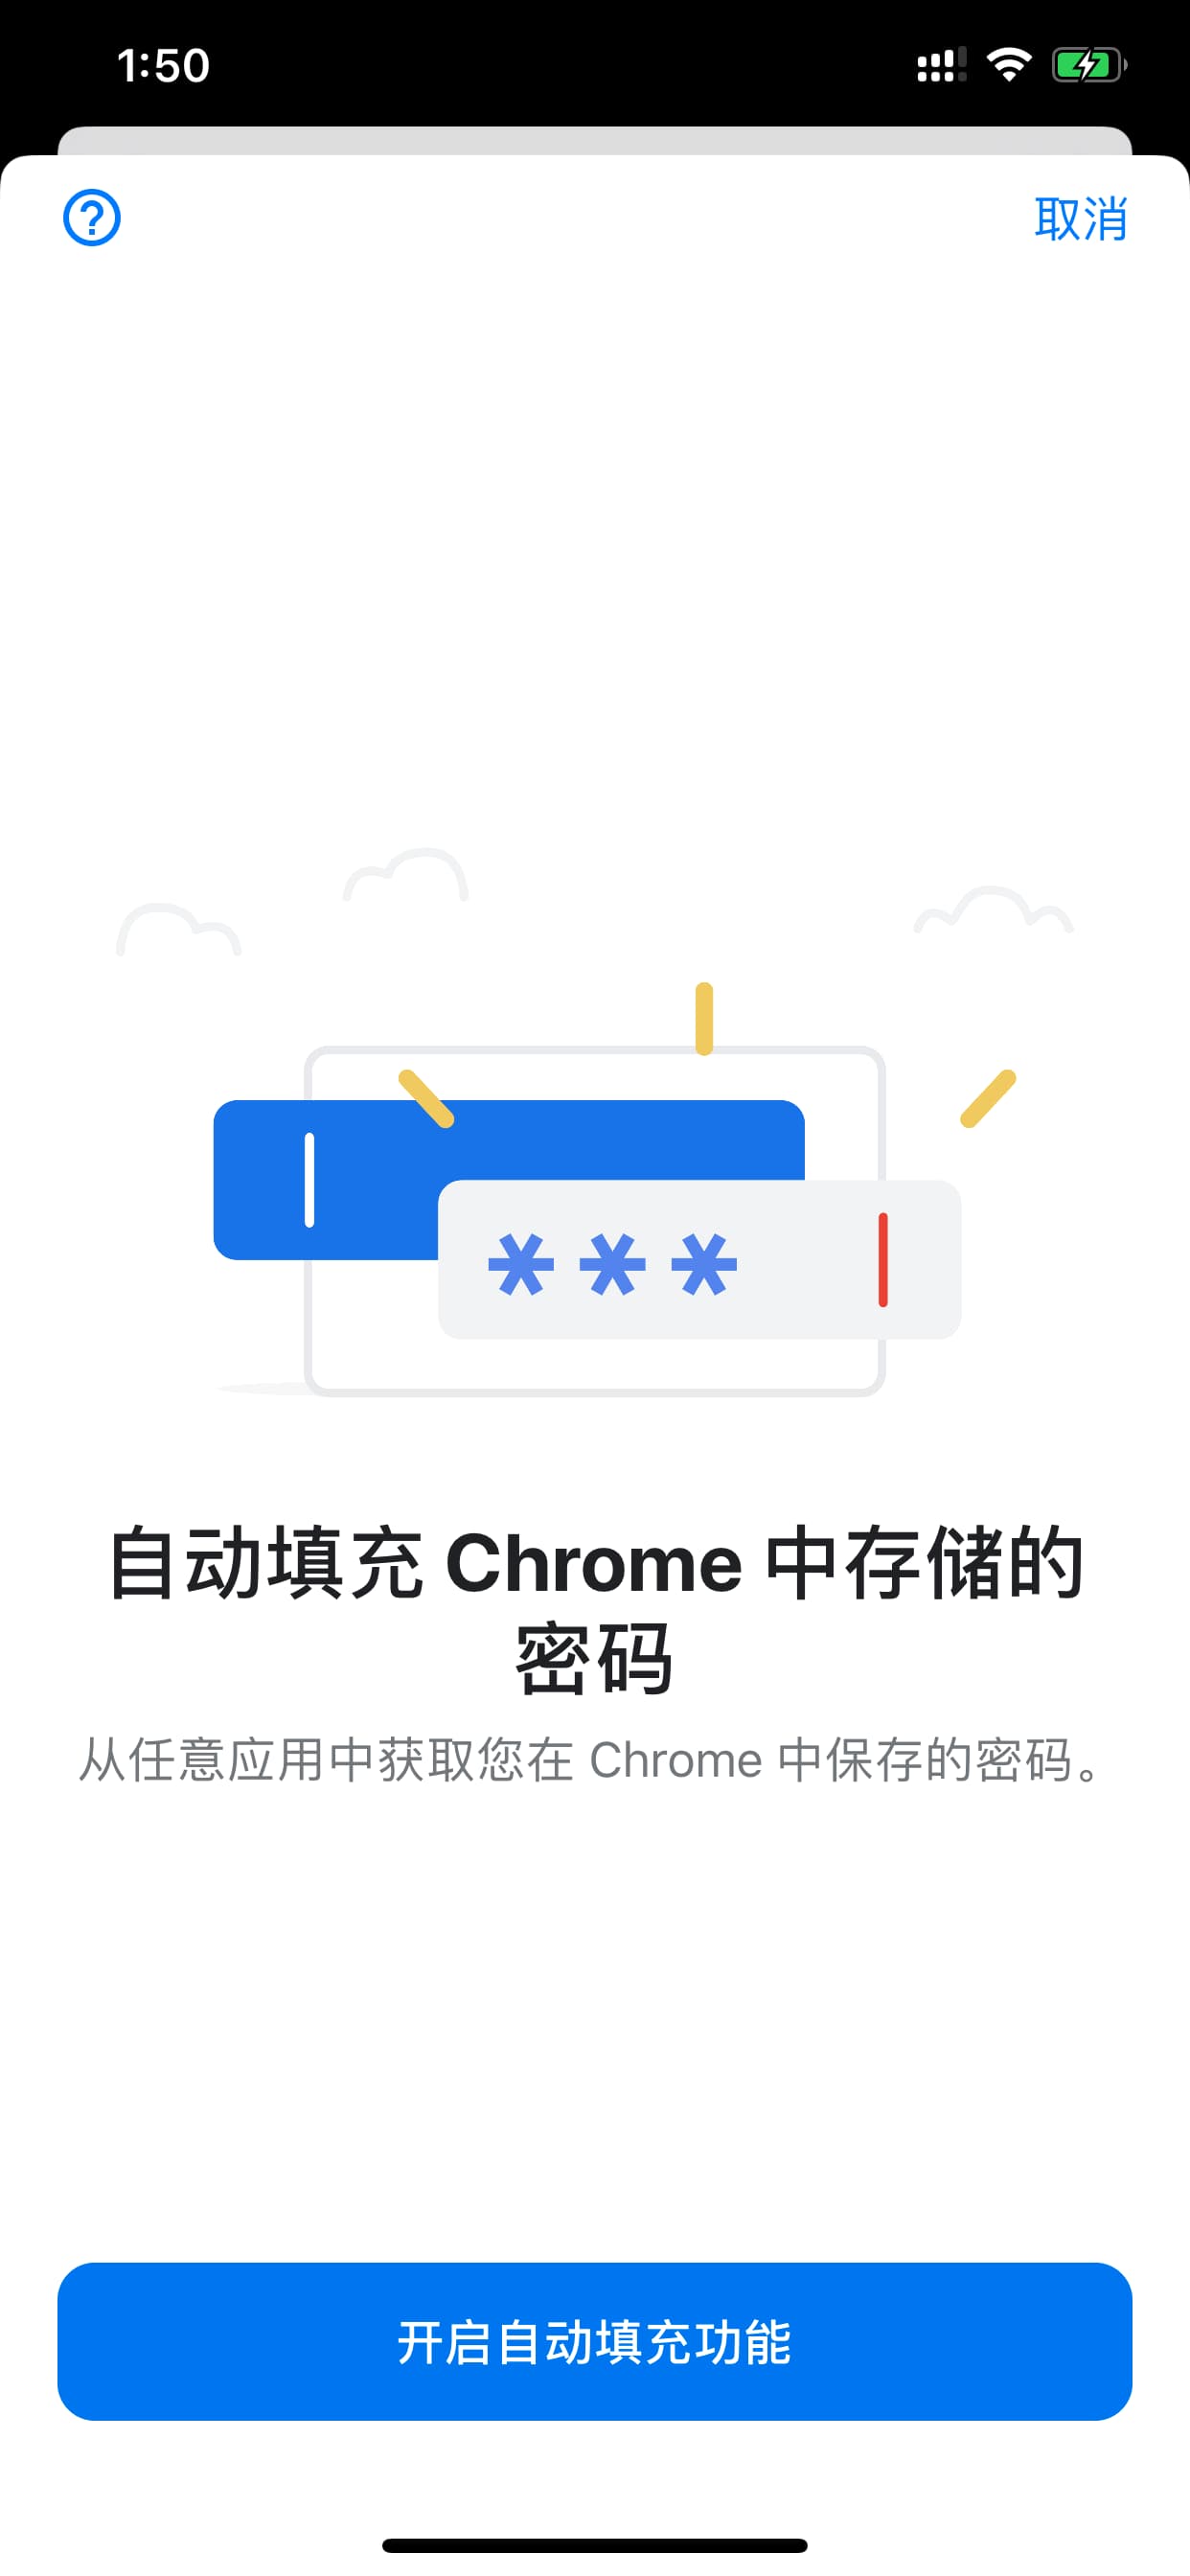 Chrome 已支持在 iOS 同步密码，并在浏览器及第三方应用自动填充密码 3